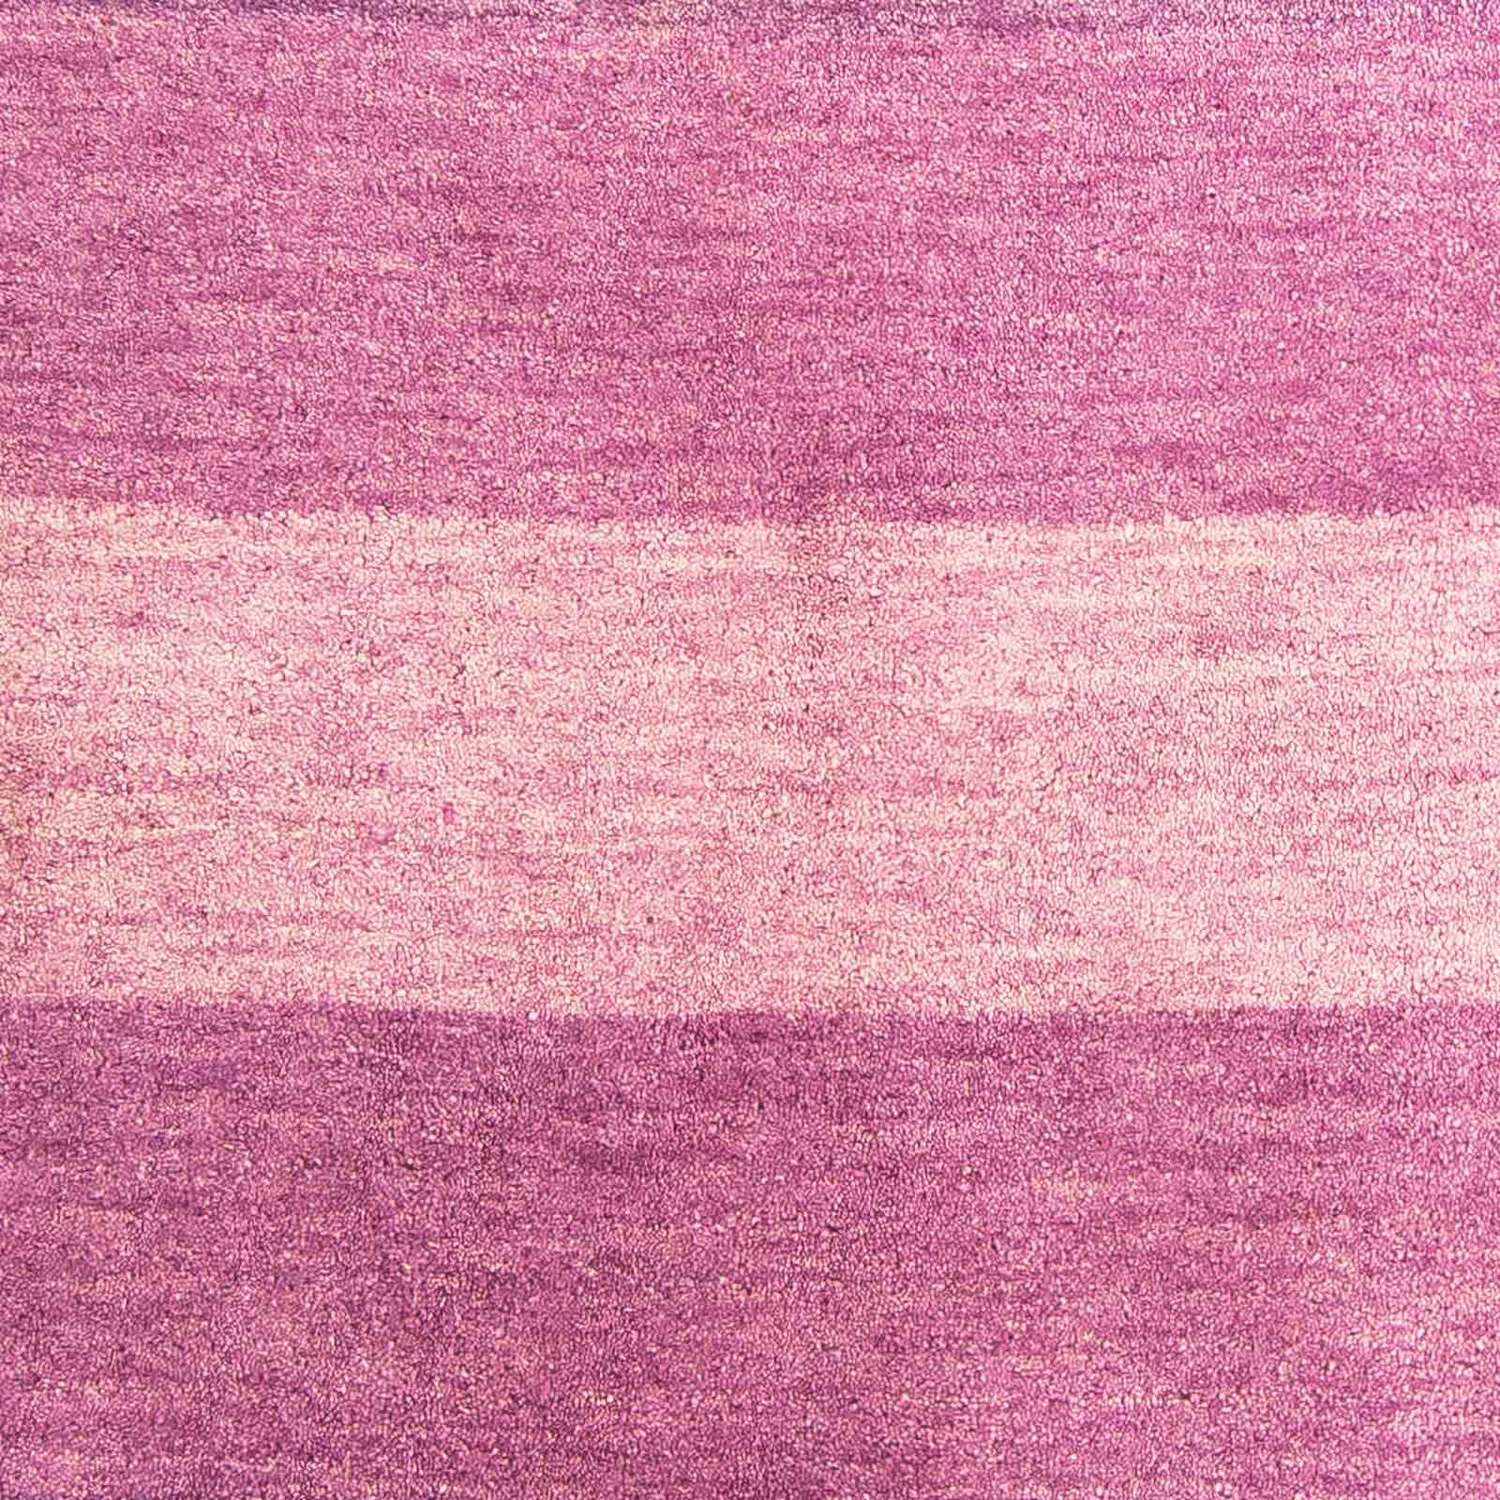 Wool Rug - 193 x 140 cm - purple